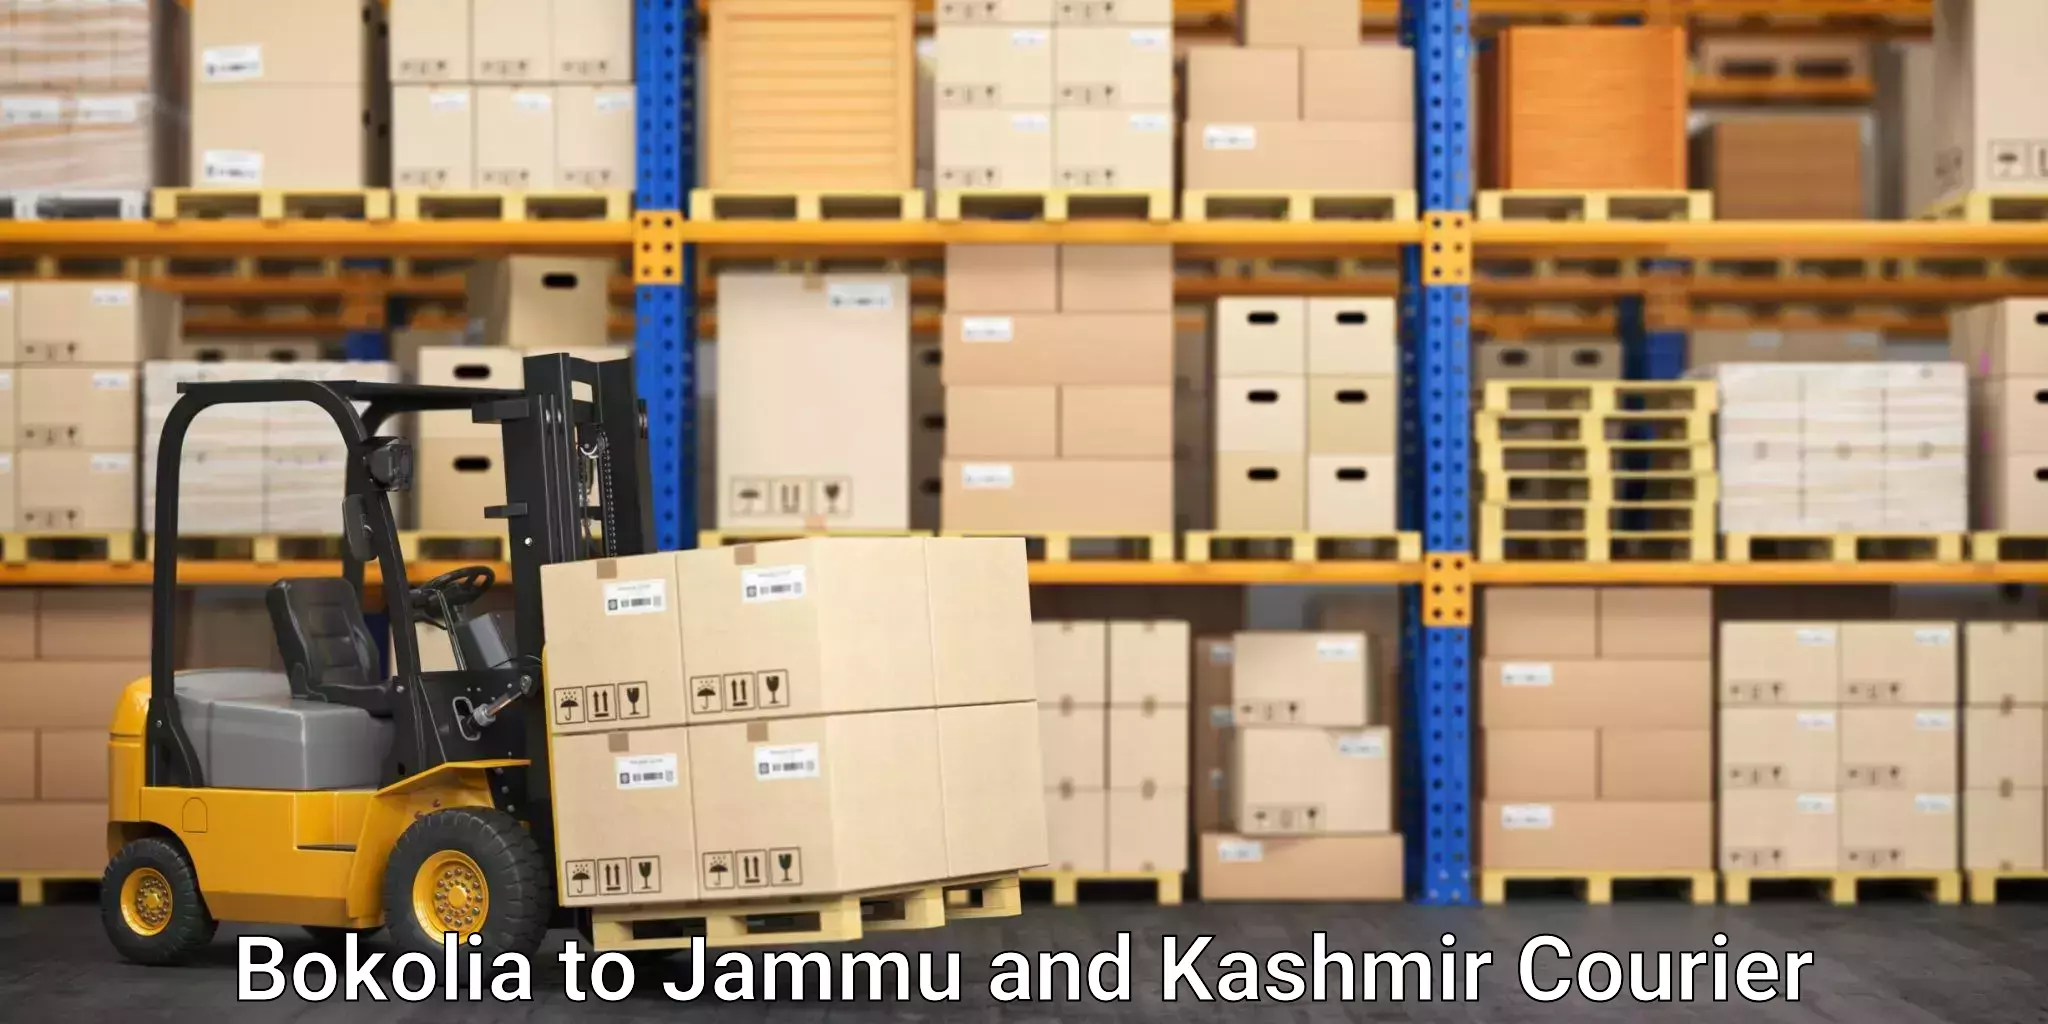 24/7 courier service Bokolia to Jammu and Kashmir